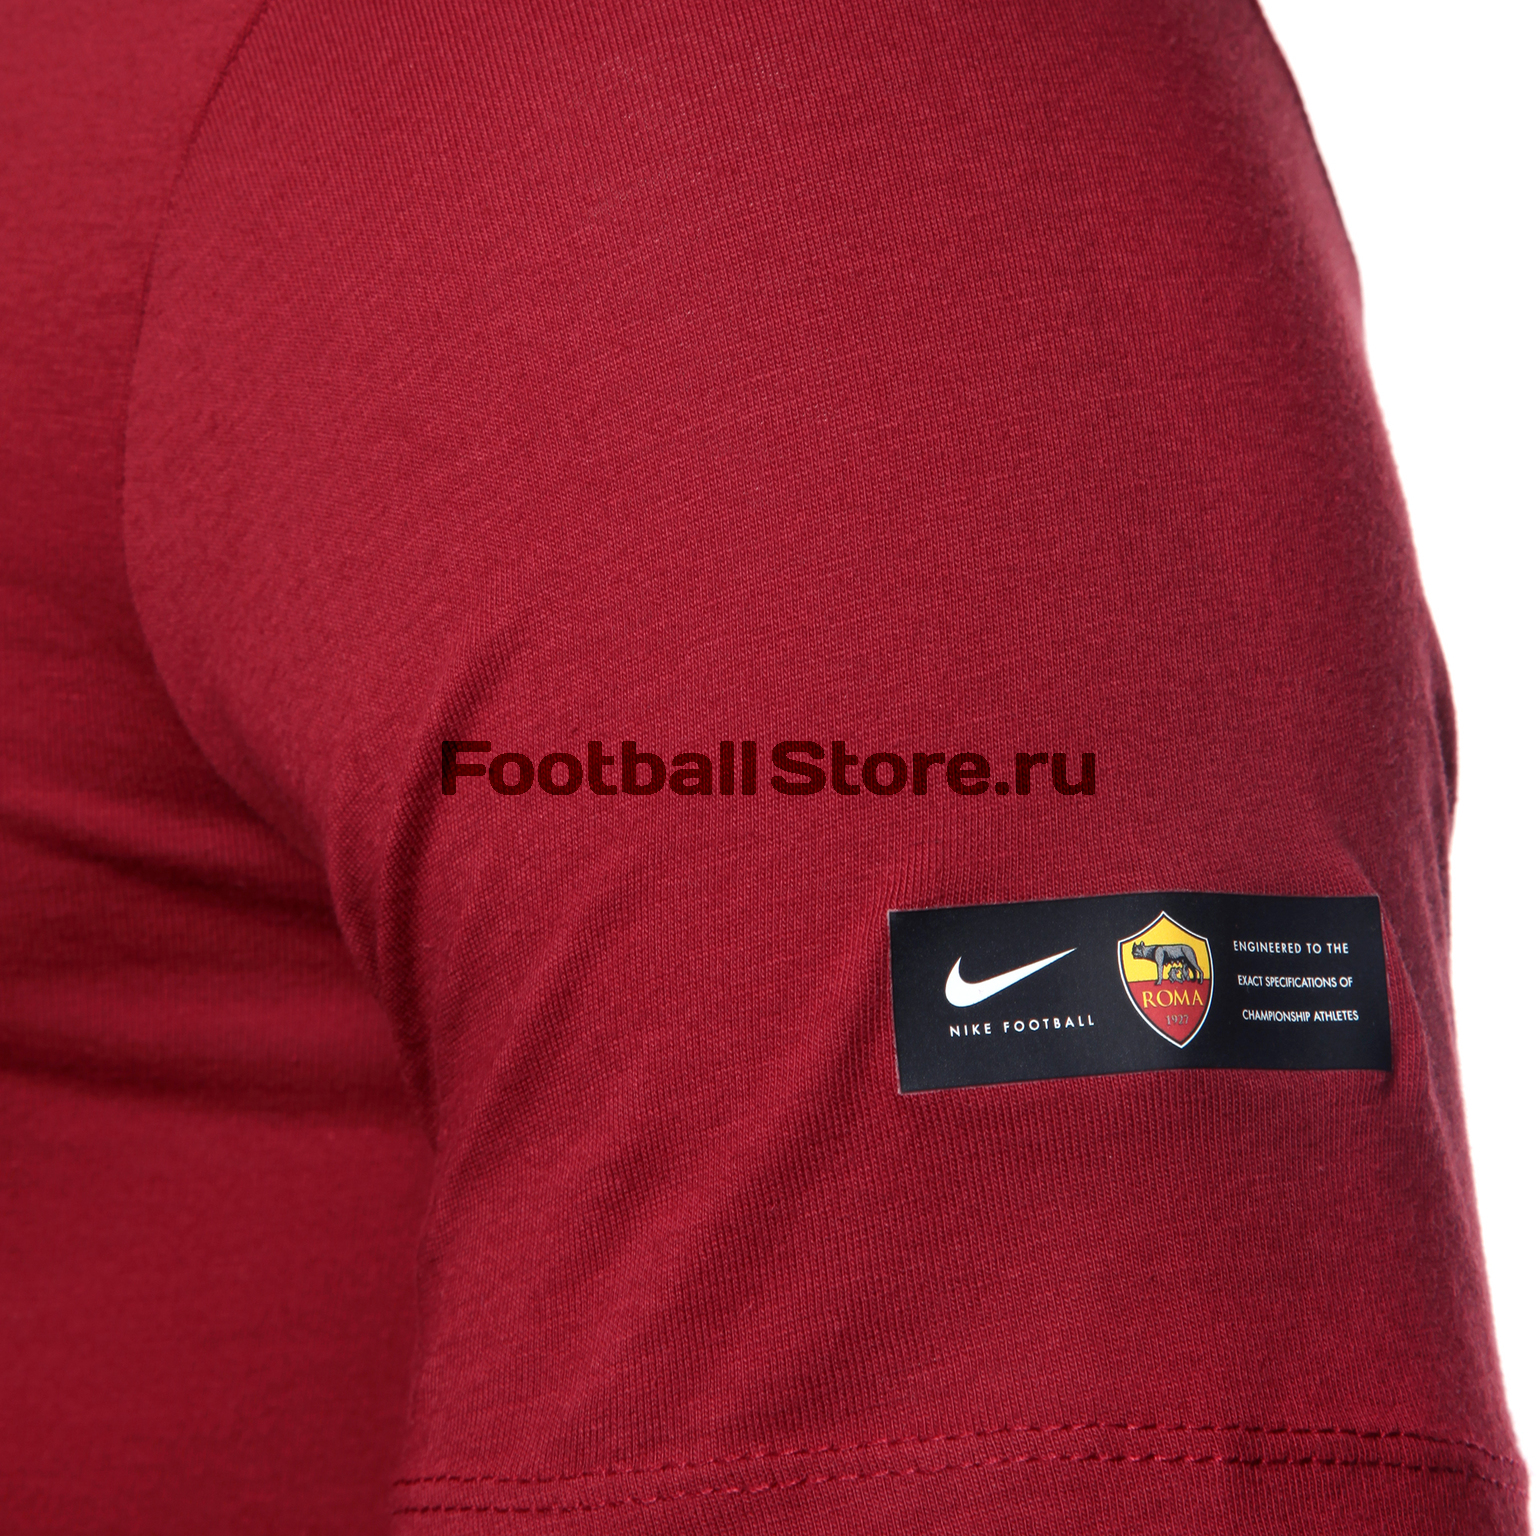 Футболка Nike Roma Tee Crest 888804-613